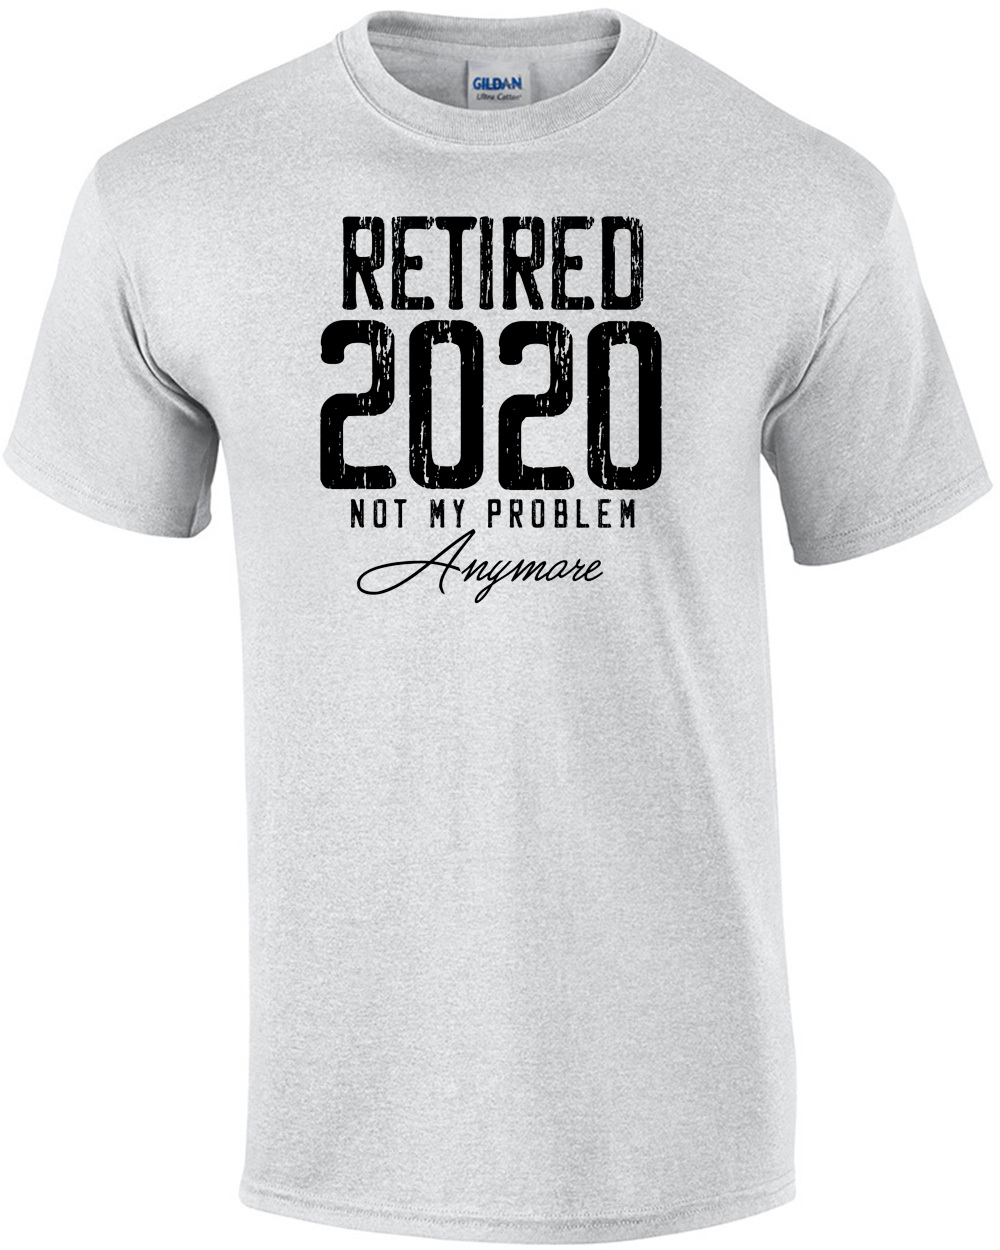 Retired 2020 Not My Problem Anymore Funny Retirement Gift T-Shirt Short-Sleeve Unisex 